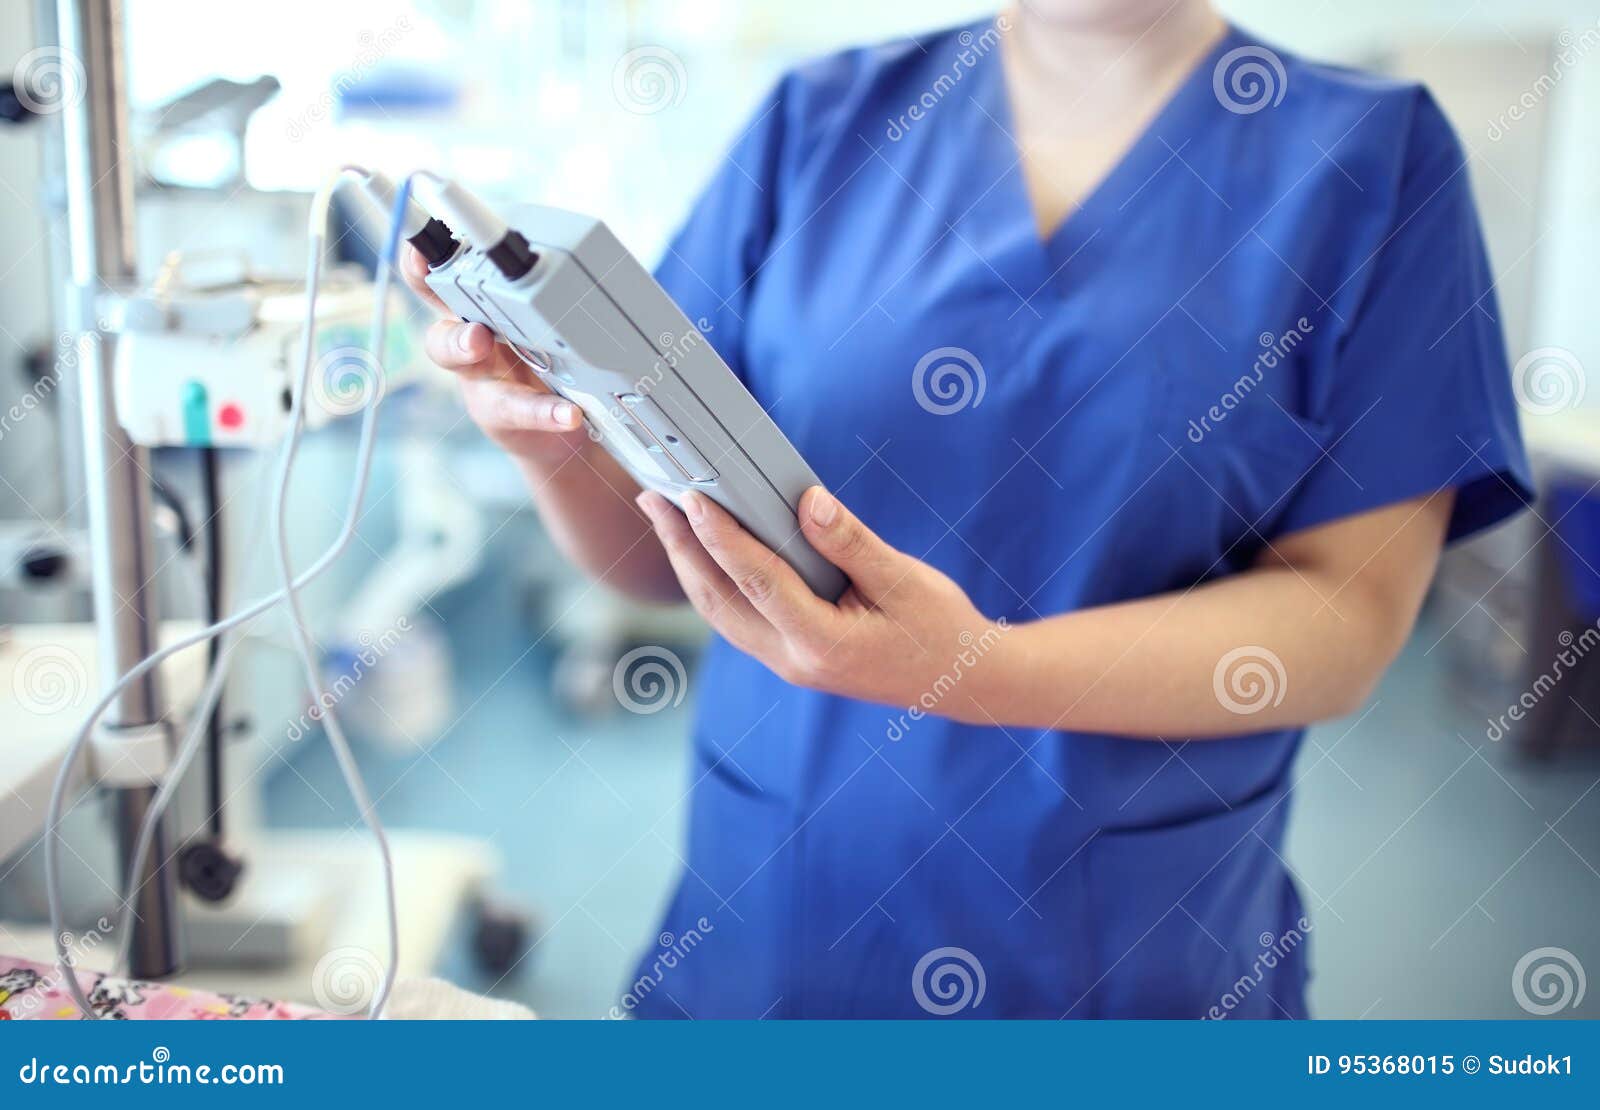 female doctor adjust electronic medical device